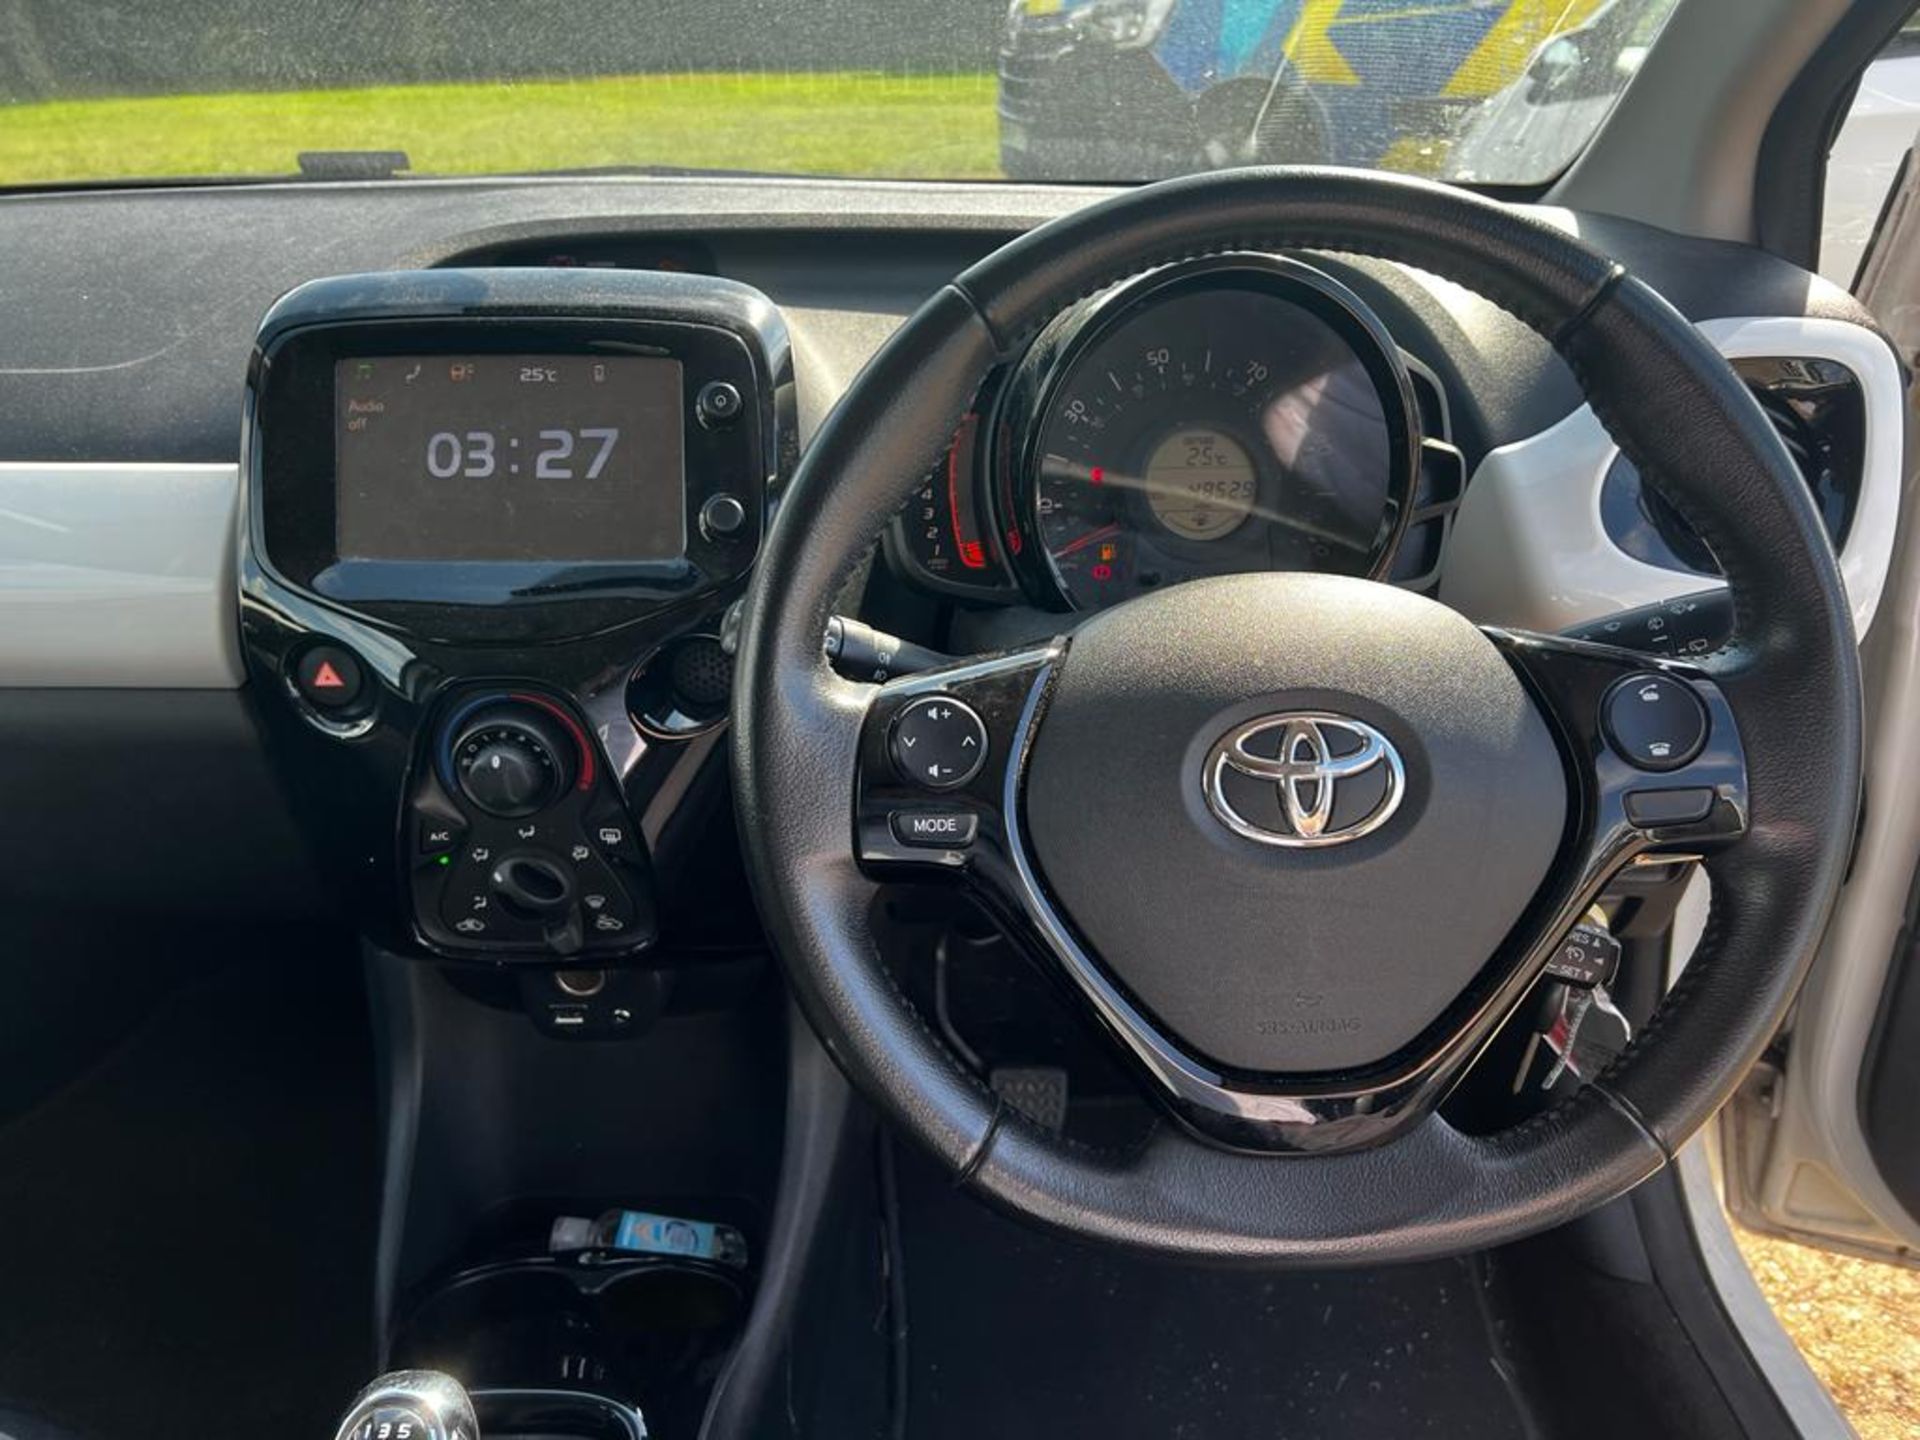 Toyota Aygo X-Pression Vvt-I petrol hatchback, 67bhp Registration: WD16 OTL Recorded mileage: 48,529 - Image 9 of 10